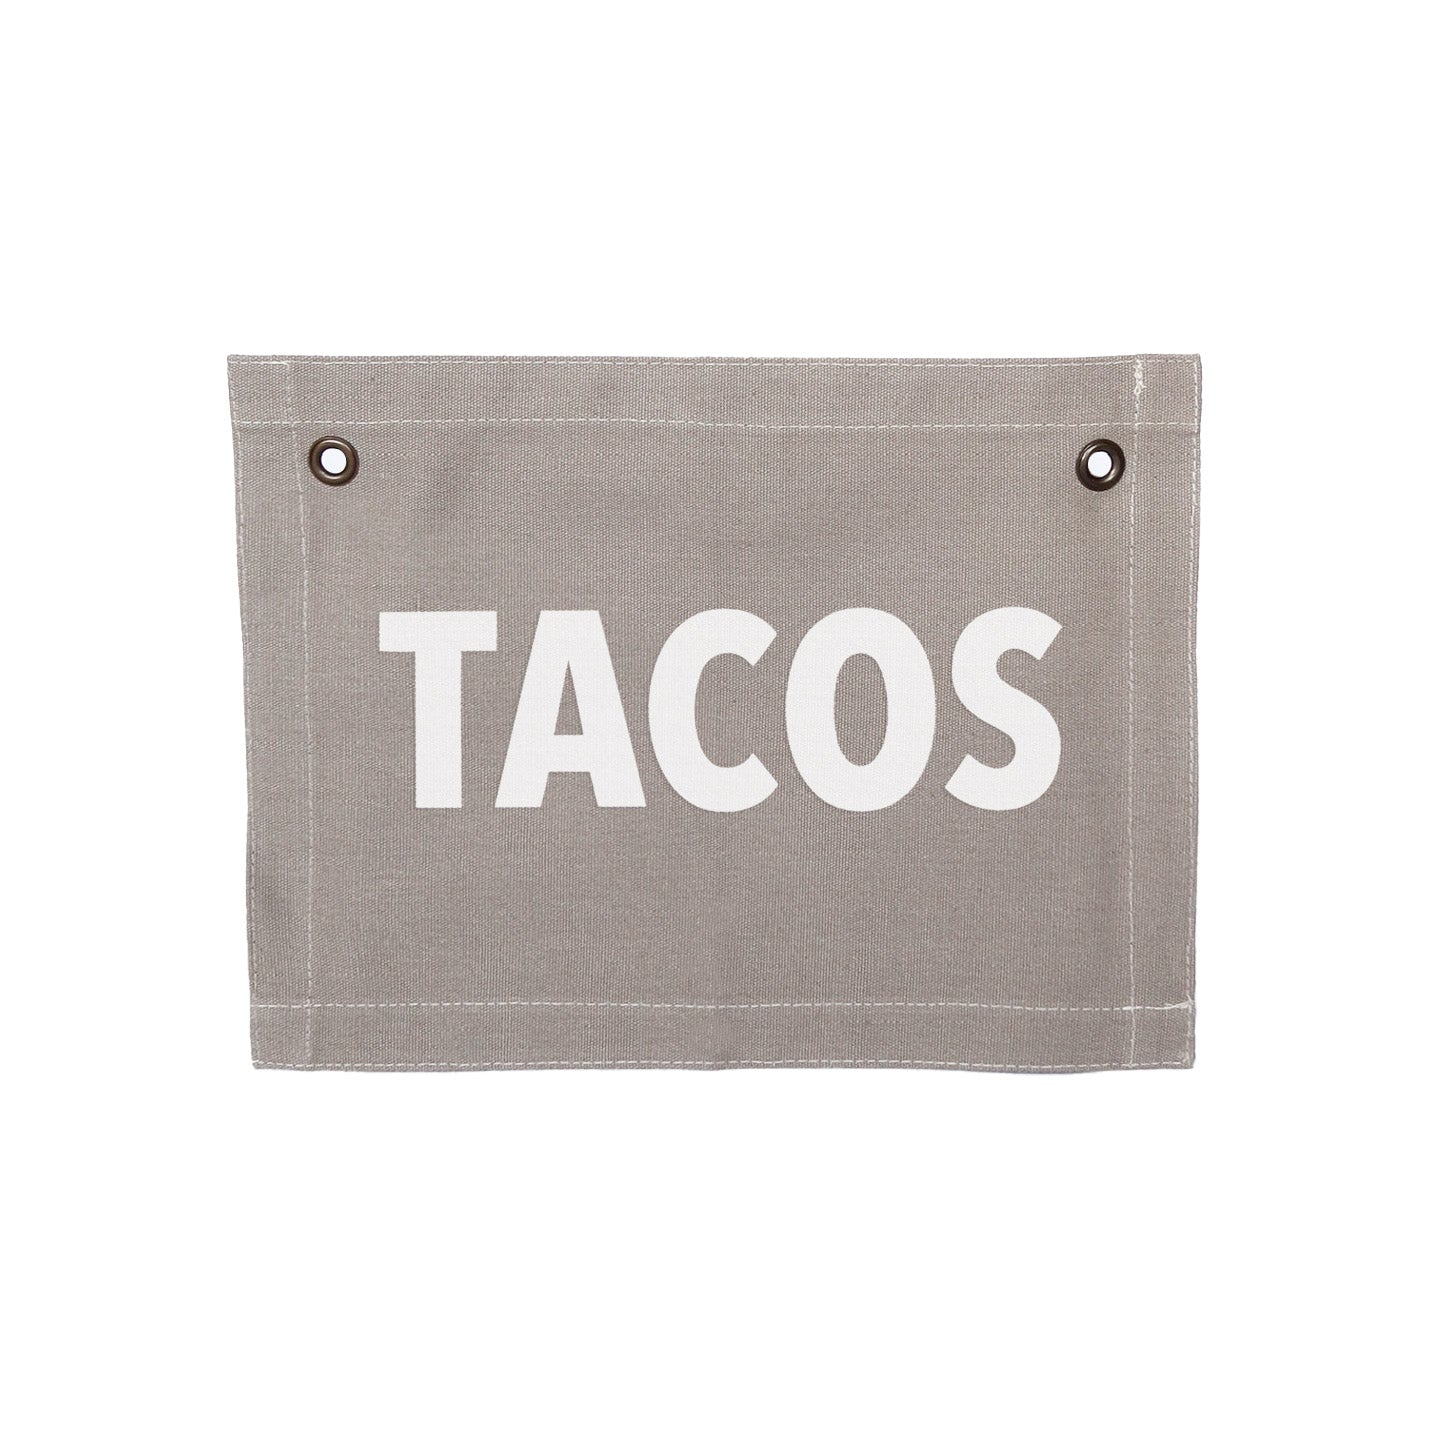 Tacos Small Canvas Flag